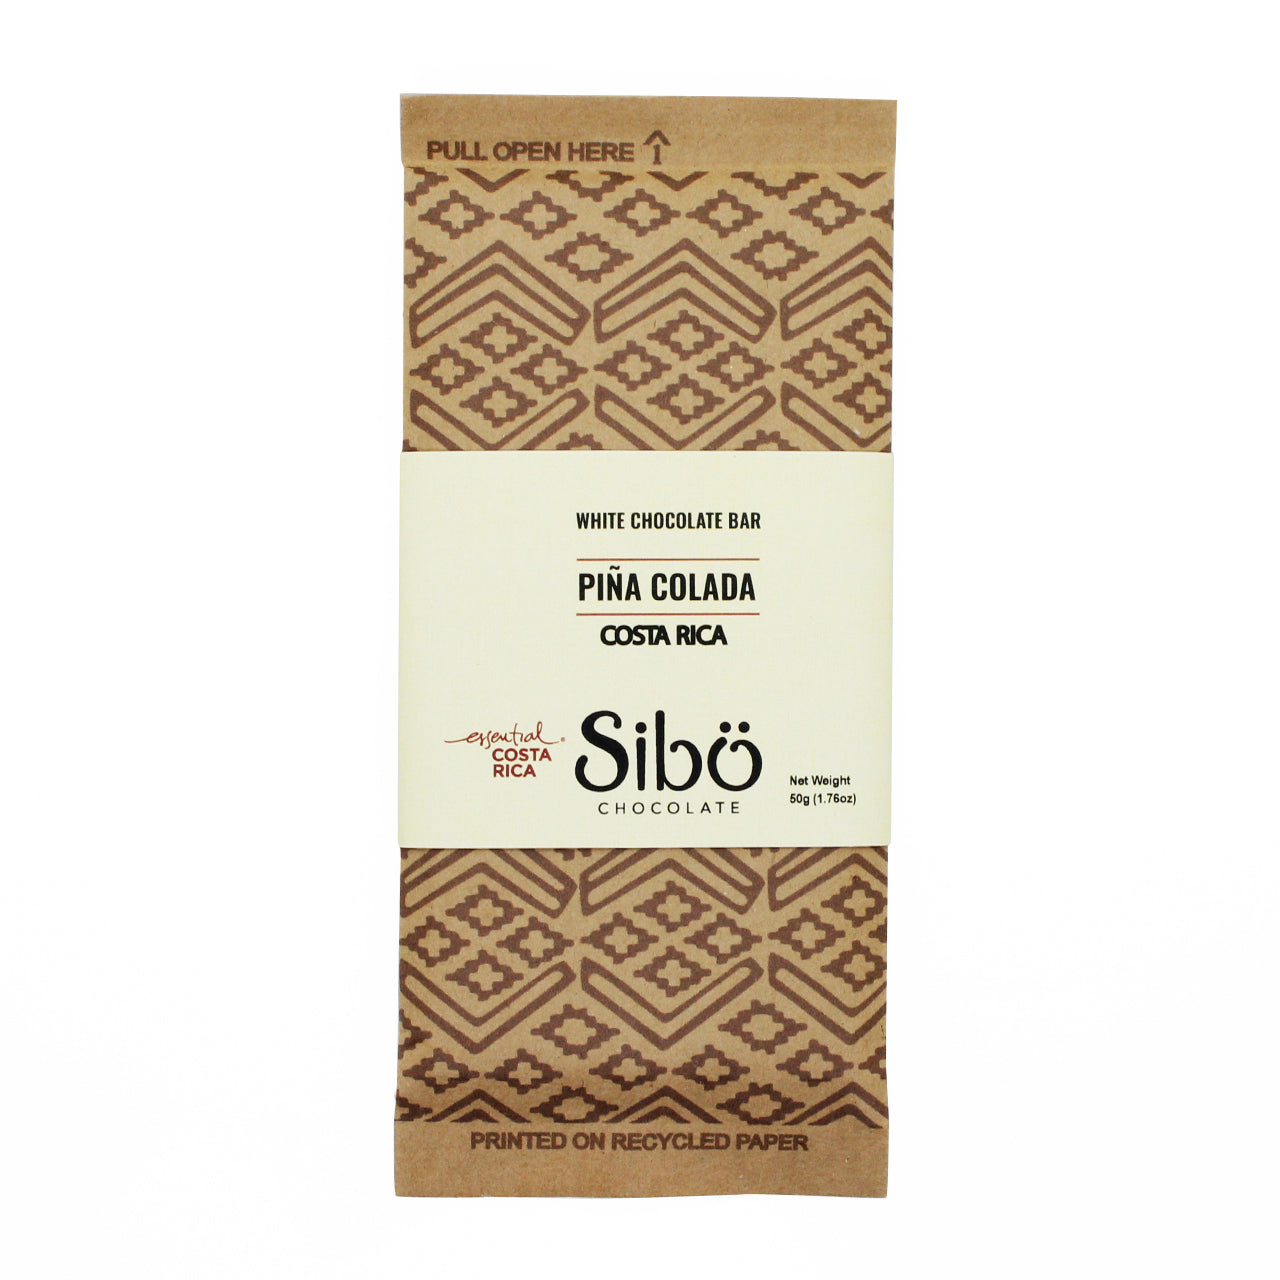 Sibu Chocolate シブチョコレート Piña Colada ピニャコラーダ 50g